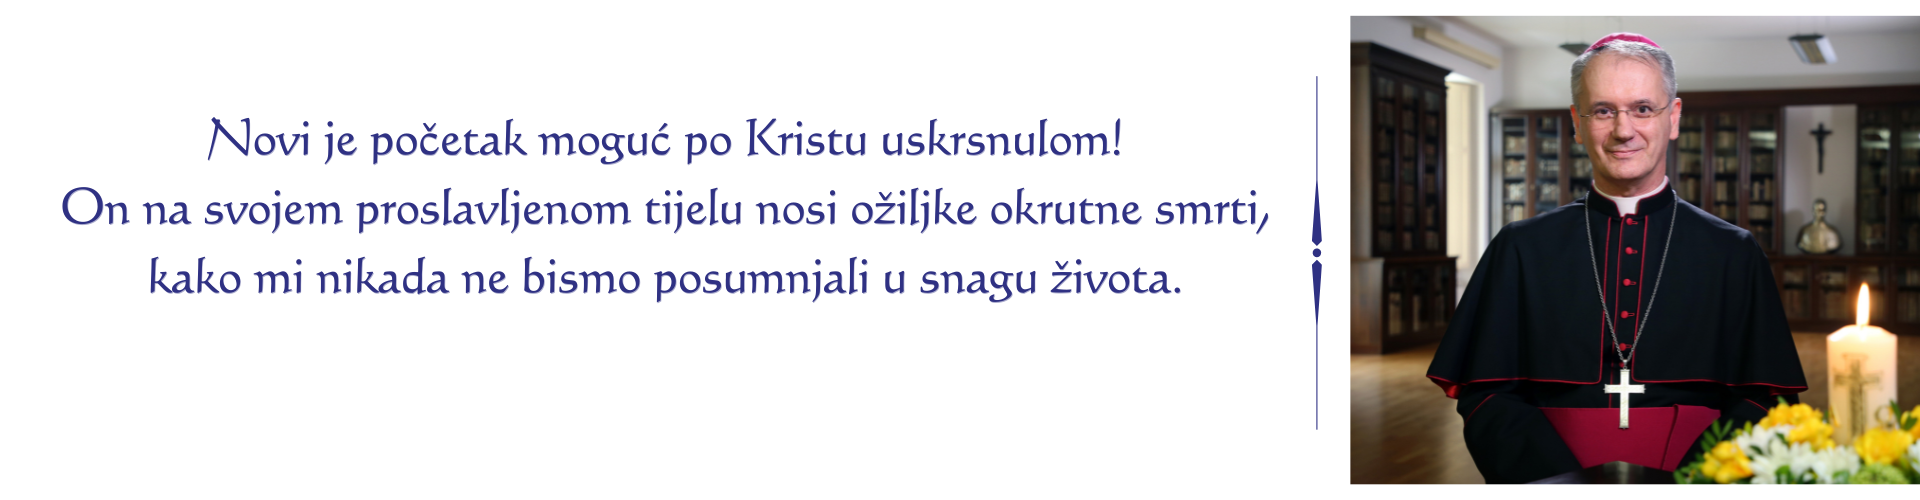 Uskrsna poruka zagrebačkoga nadbiskupa Dražena Kutleše